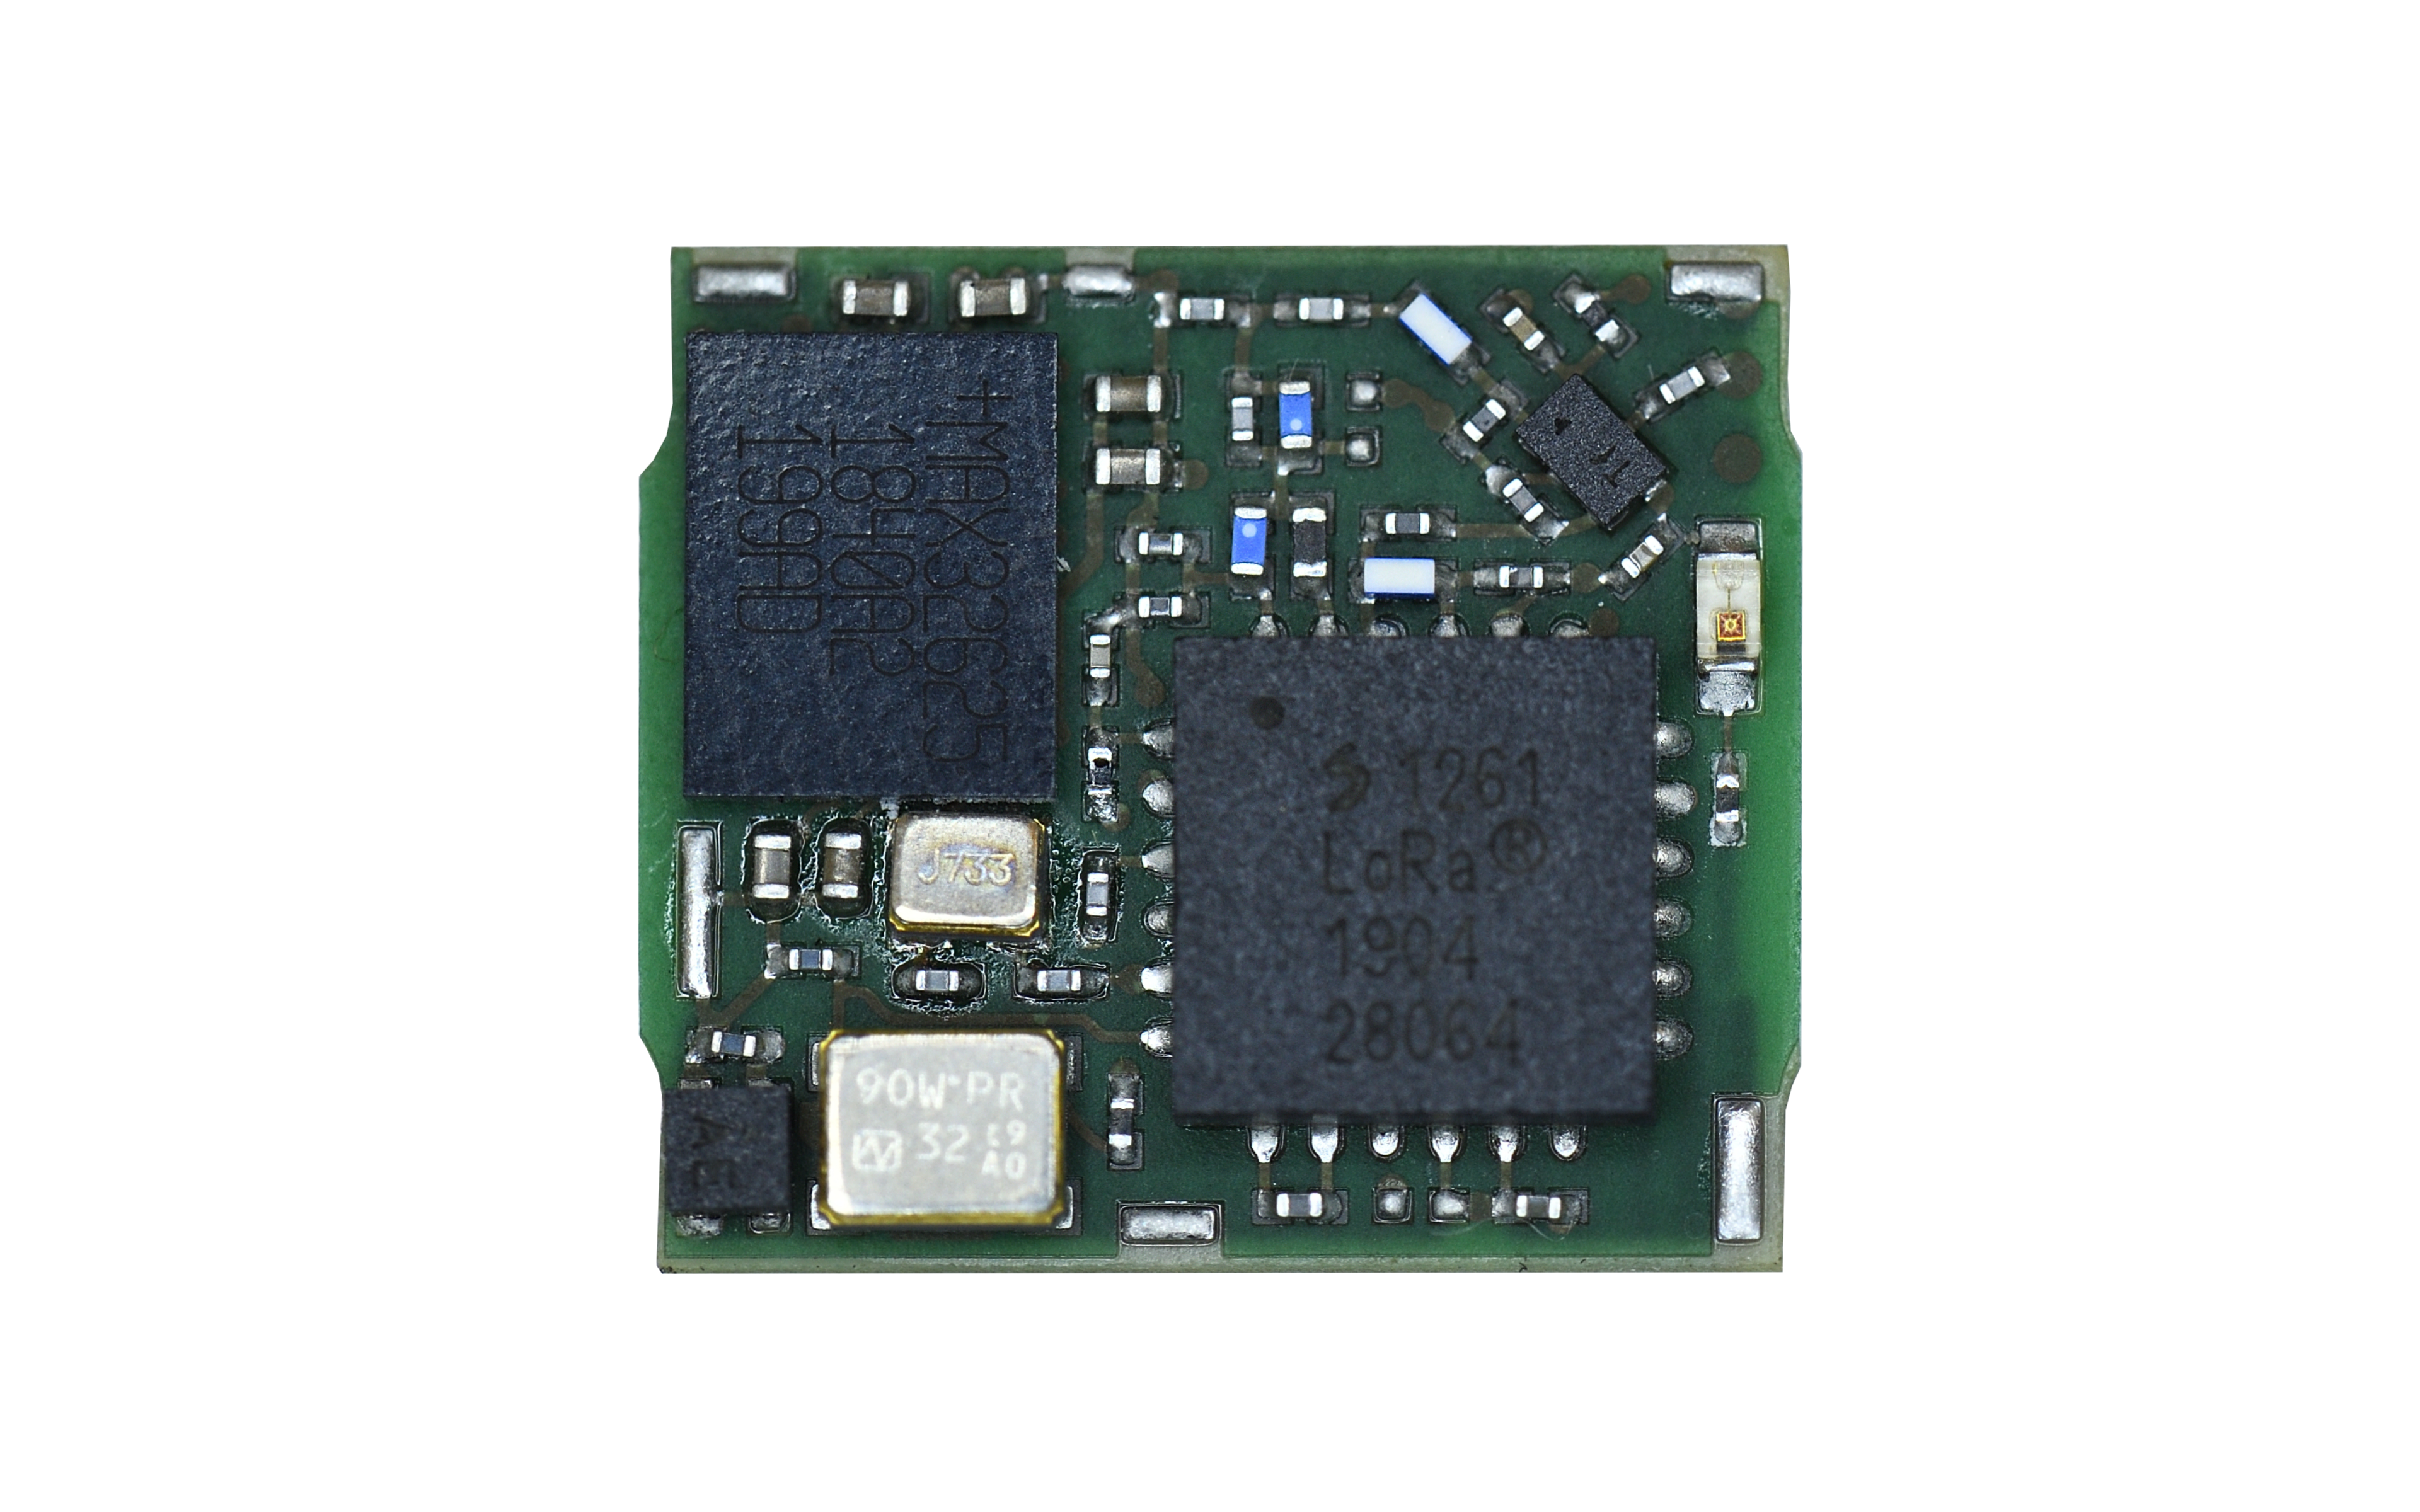 Miromico’s FMLR-6x-x-MA62x, the “World’s Smallest” LoRaWAN Module